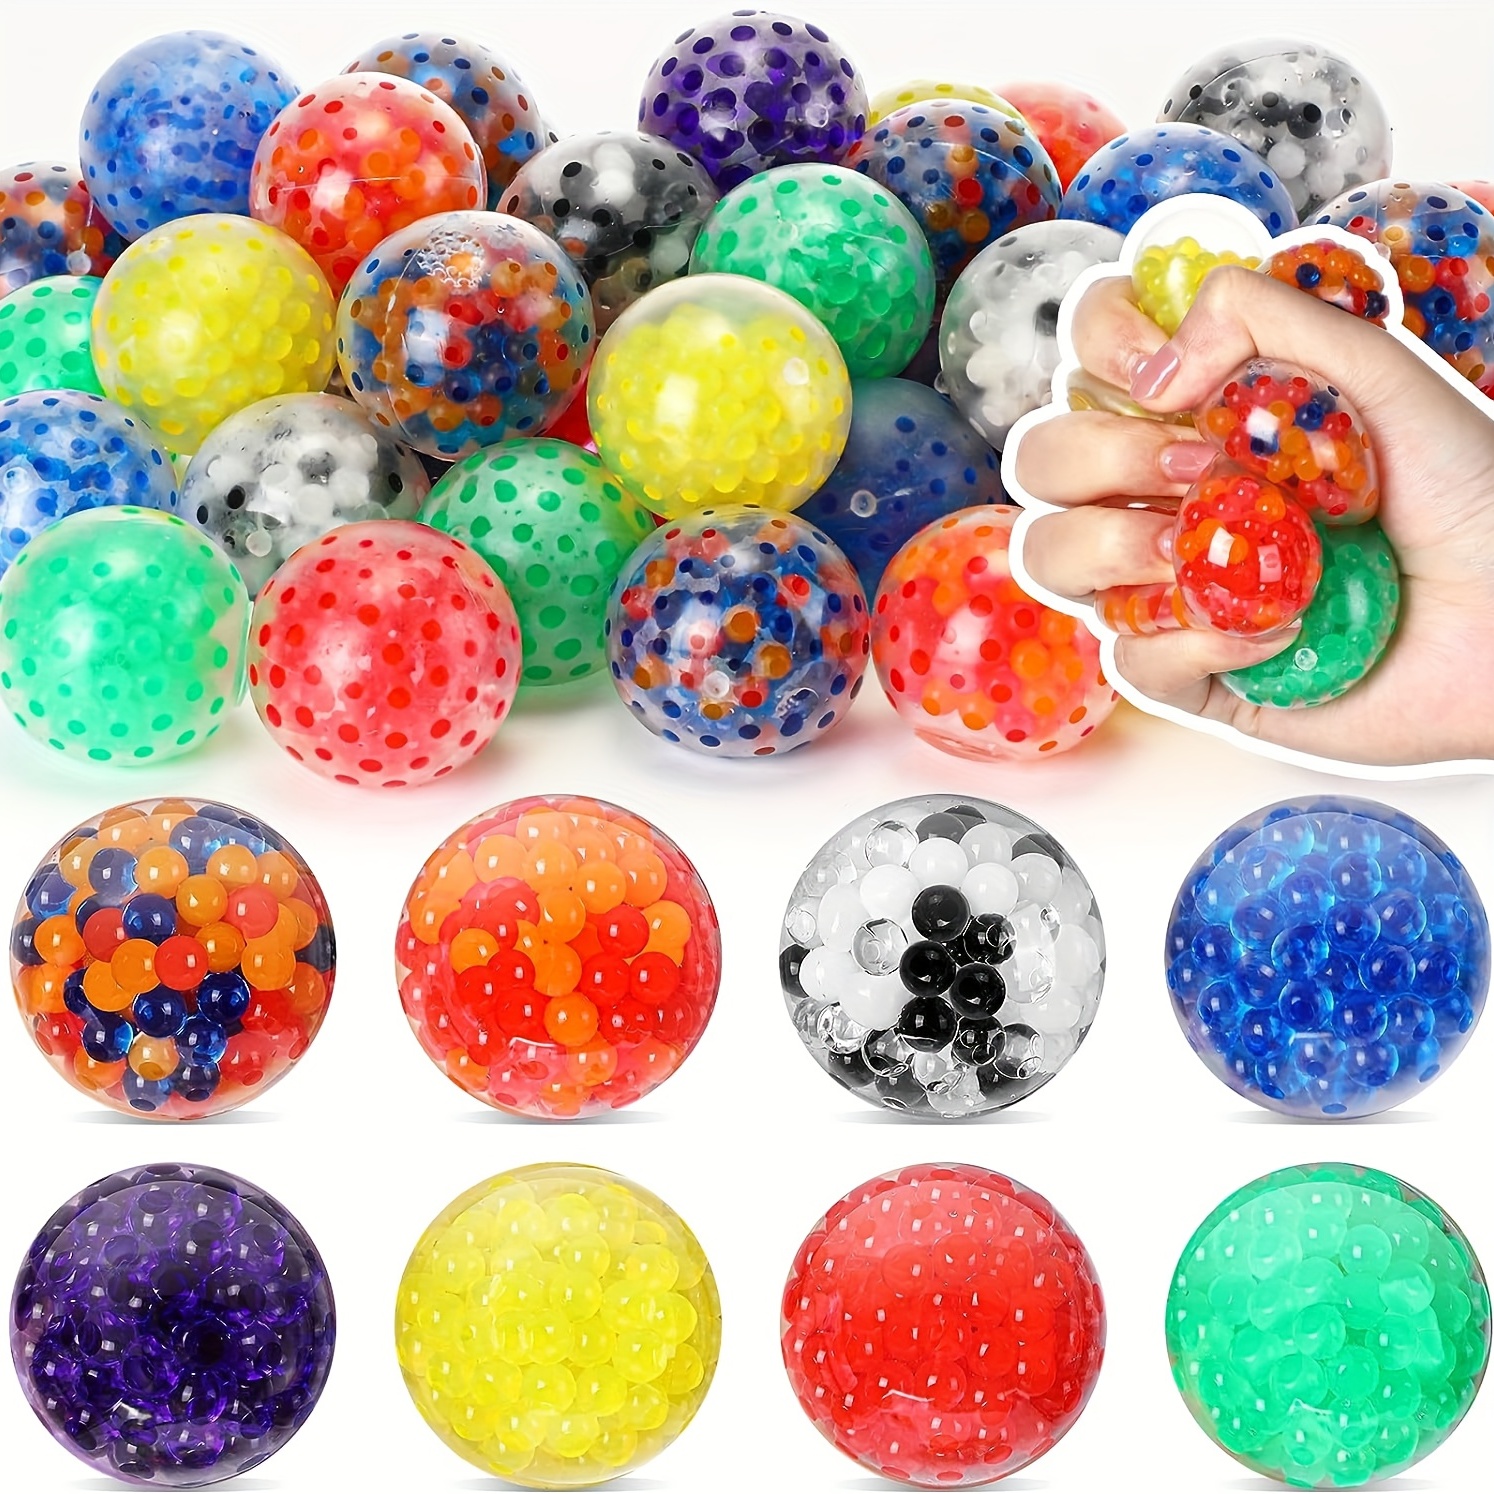 Squeeze Ball Toy, balles anti-stress spongieuses avec perles